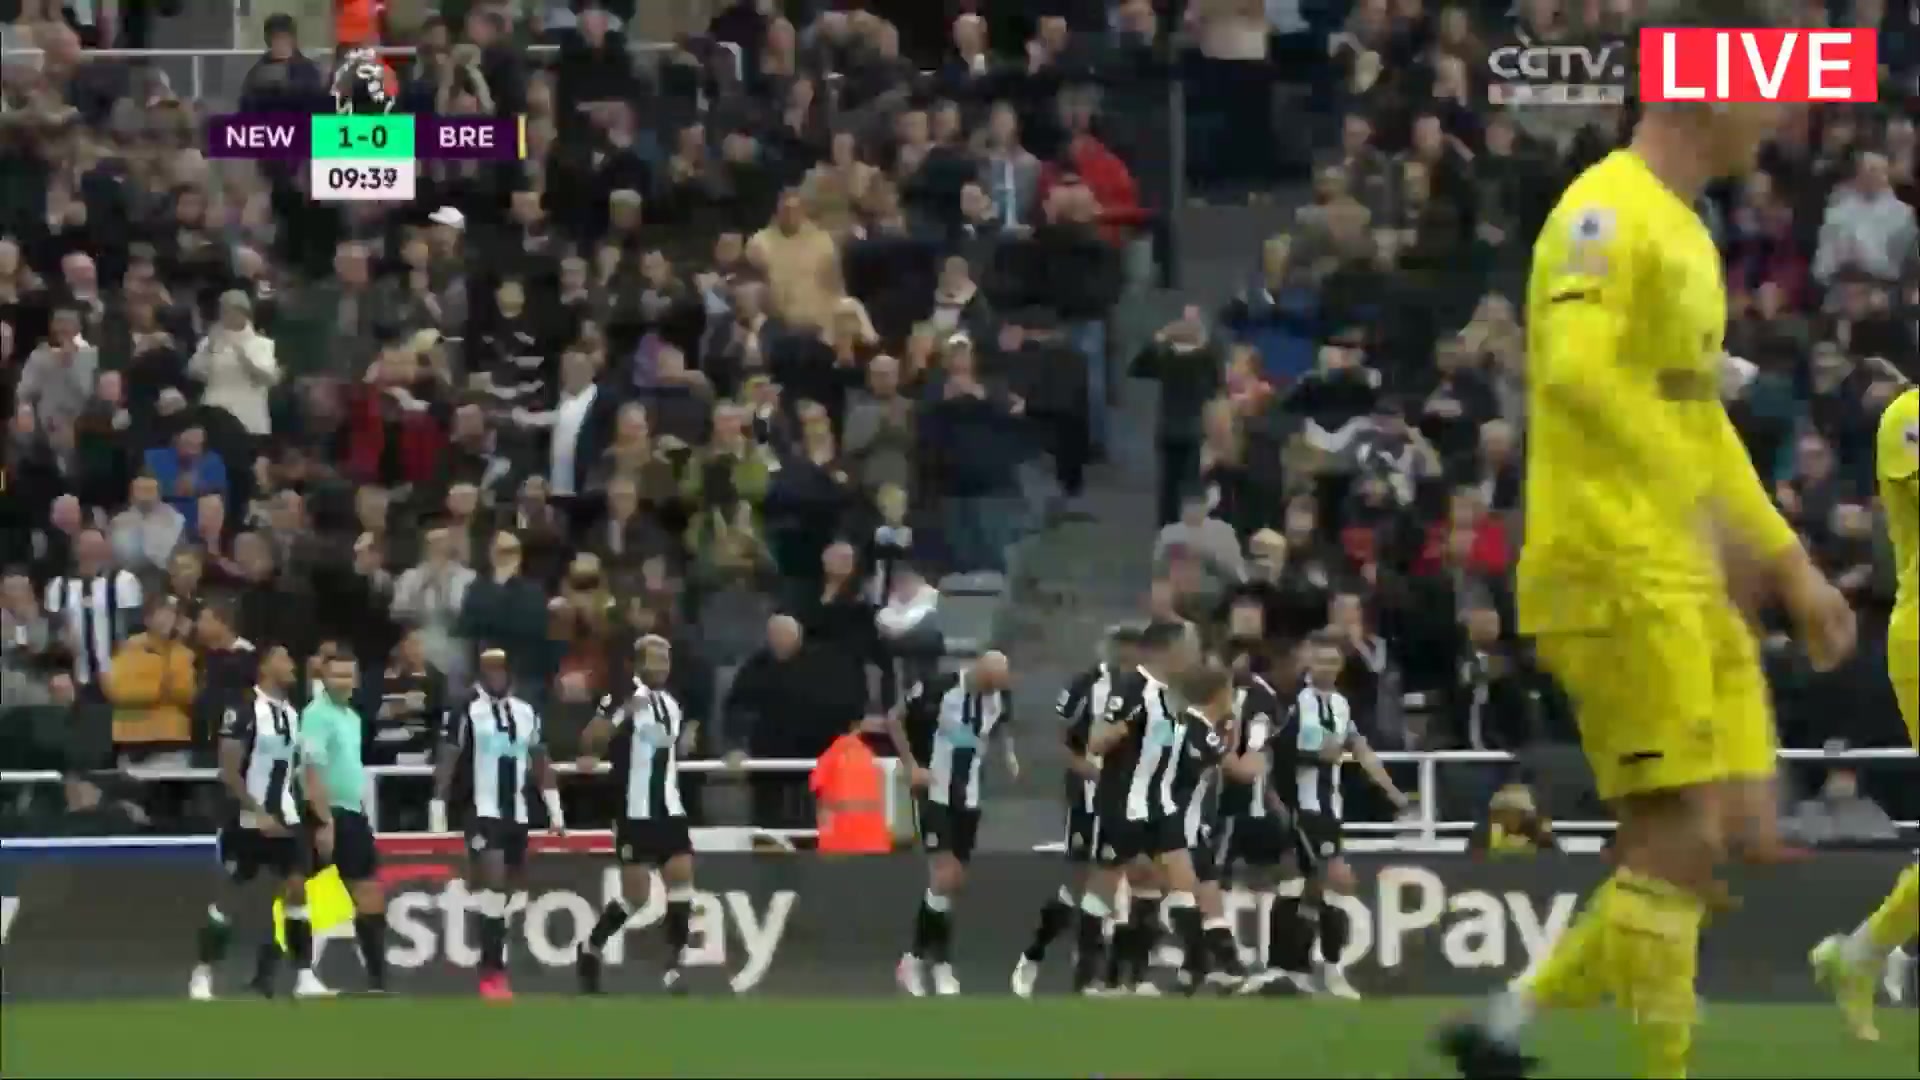 EPL Newcastle United Vs Brentford Ivan Toney Goal in 10 min, Score 1:0